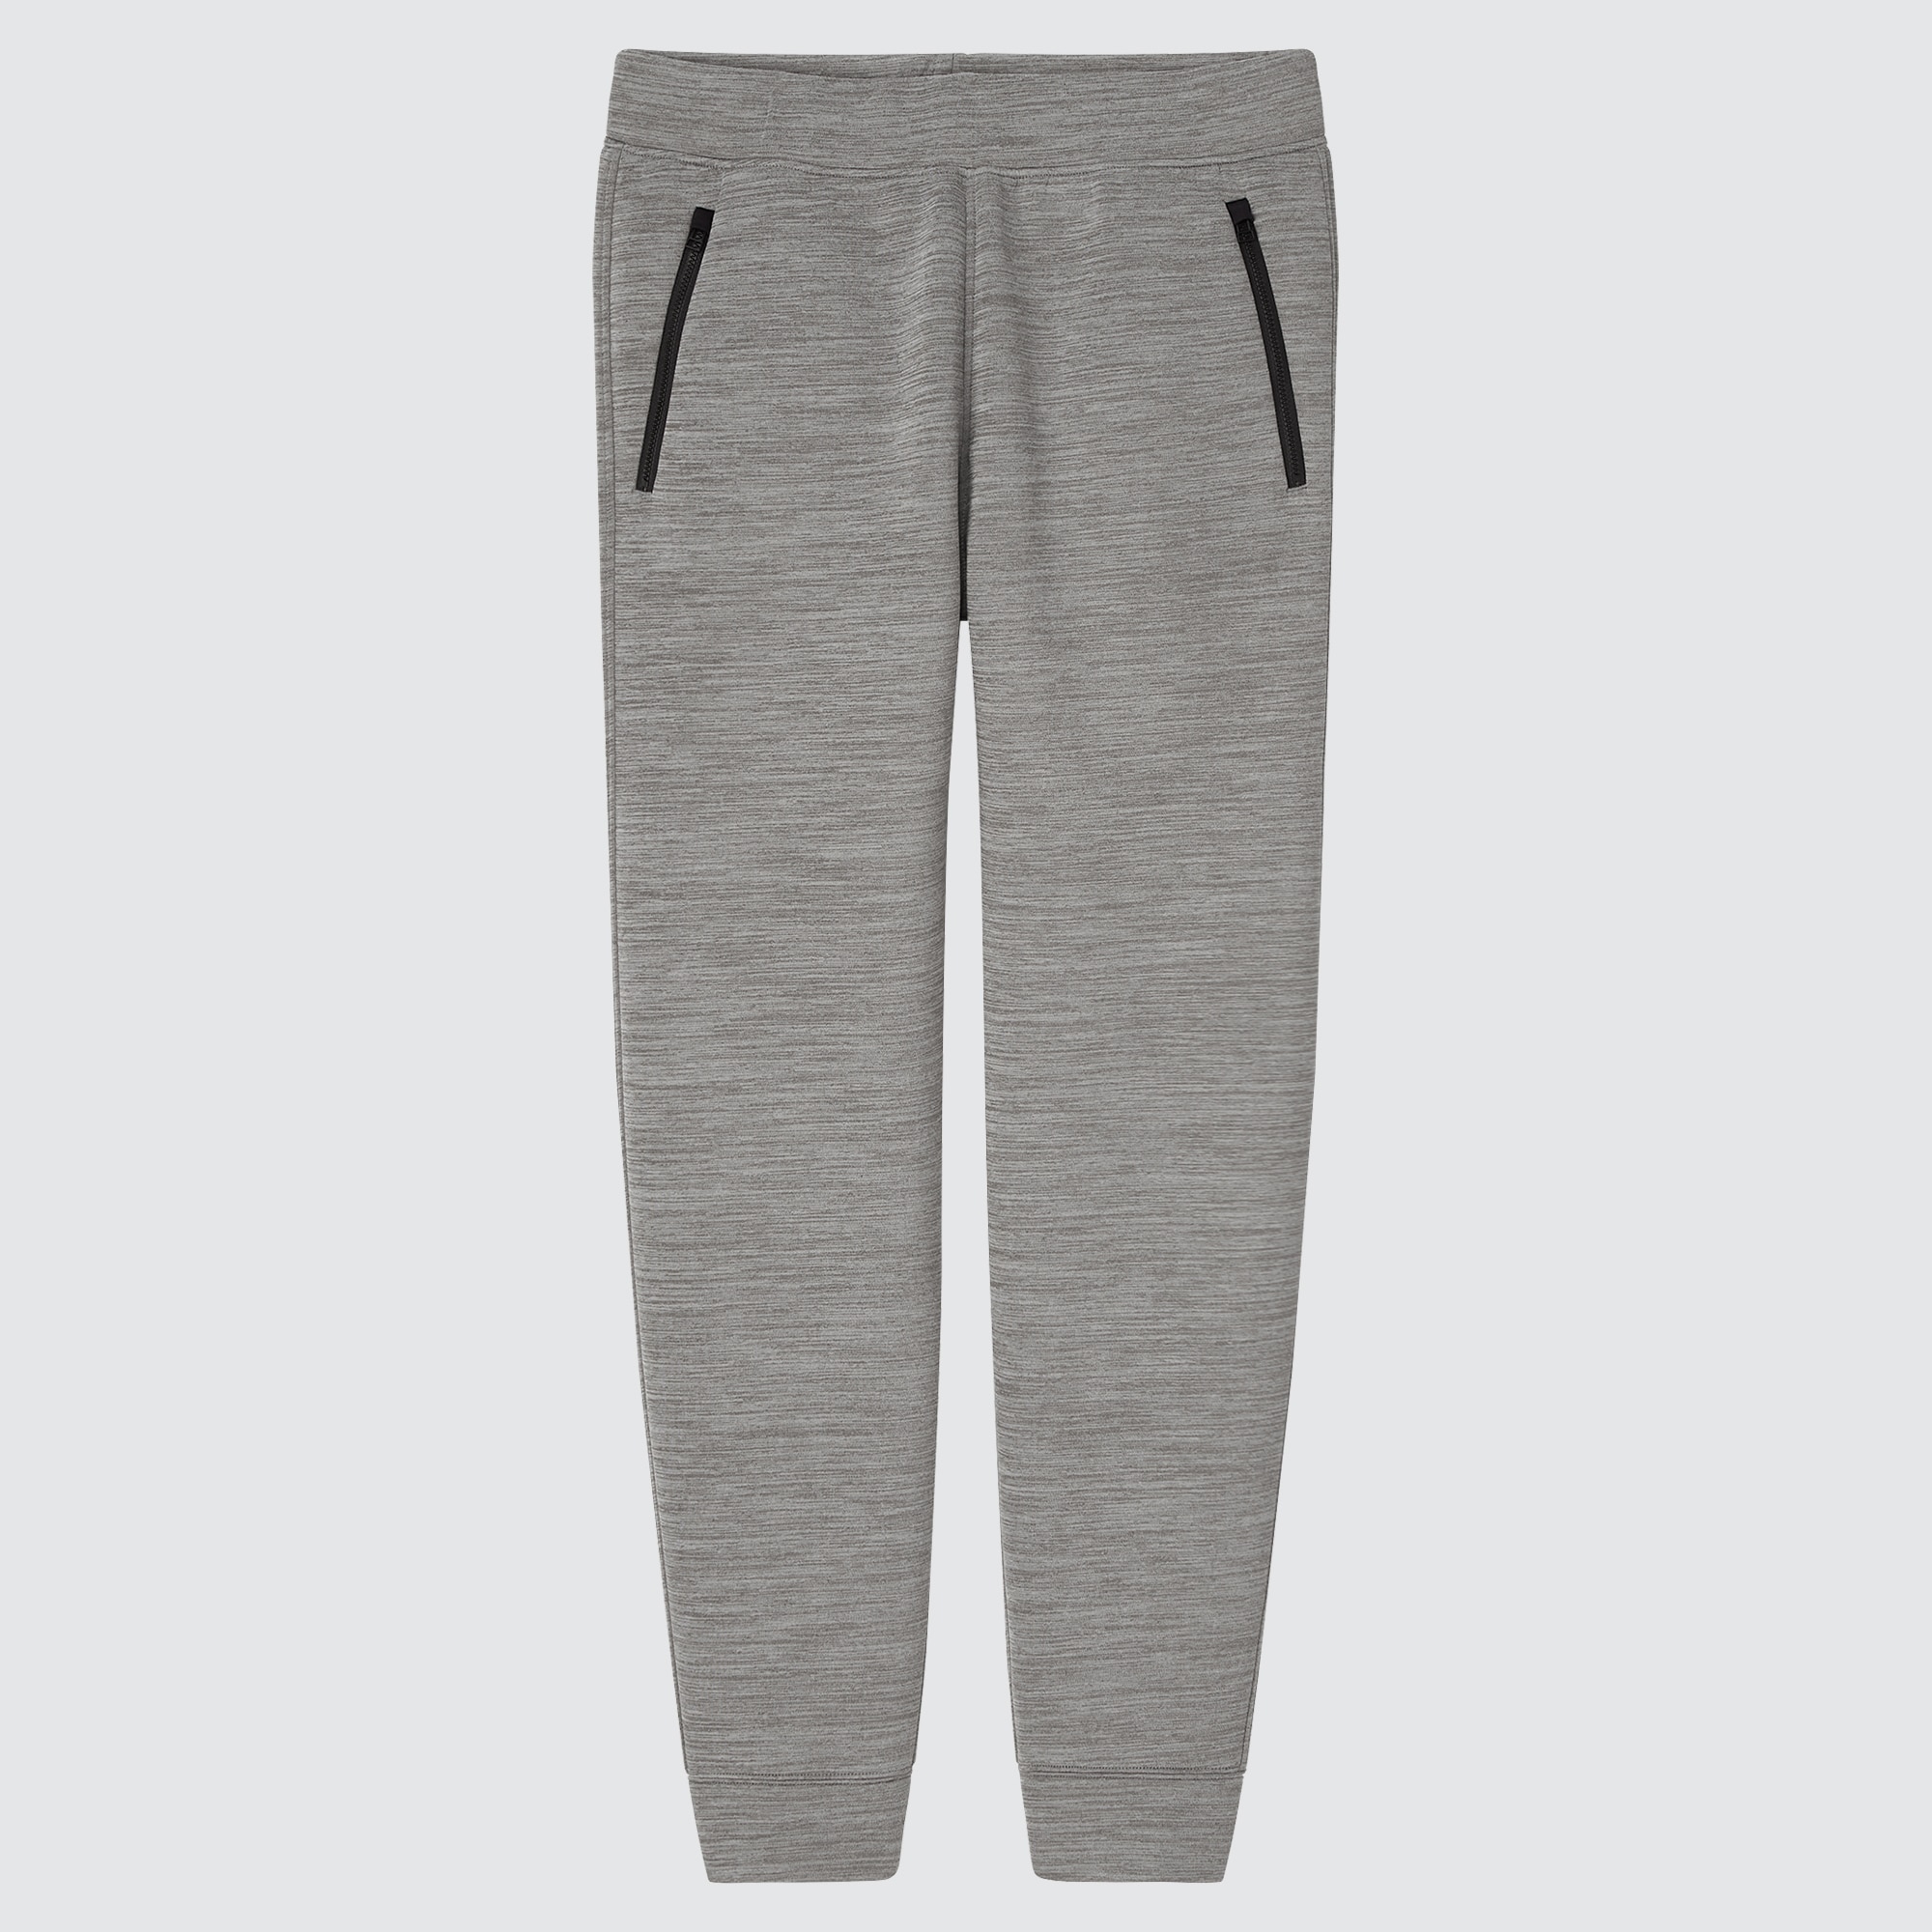 Uniqlo (Medium-Large) Jogger Sweat Pants, Men's Fashion, Bottoms